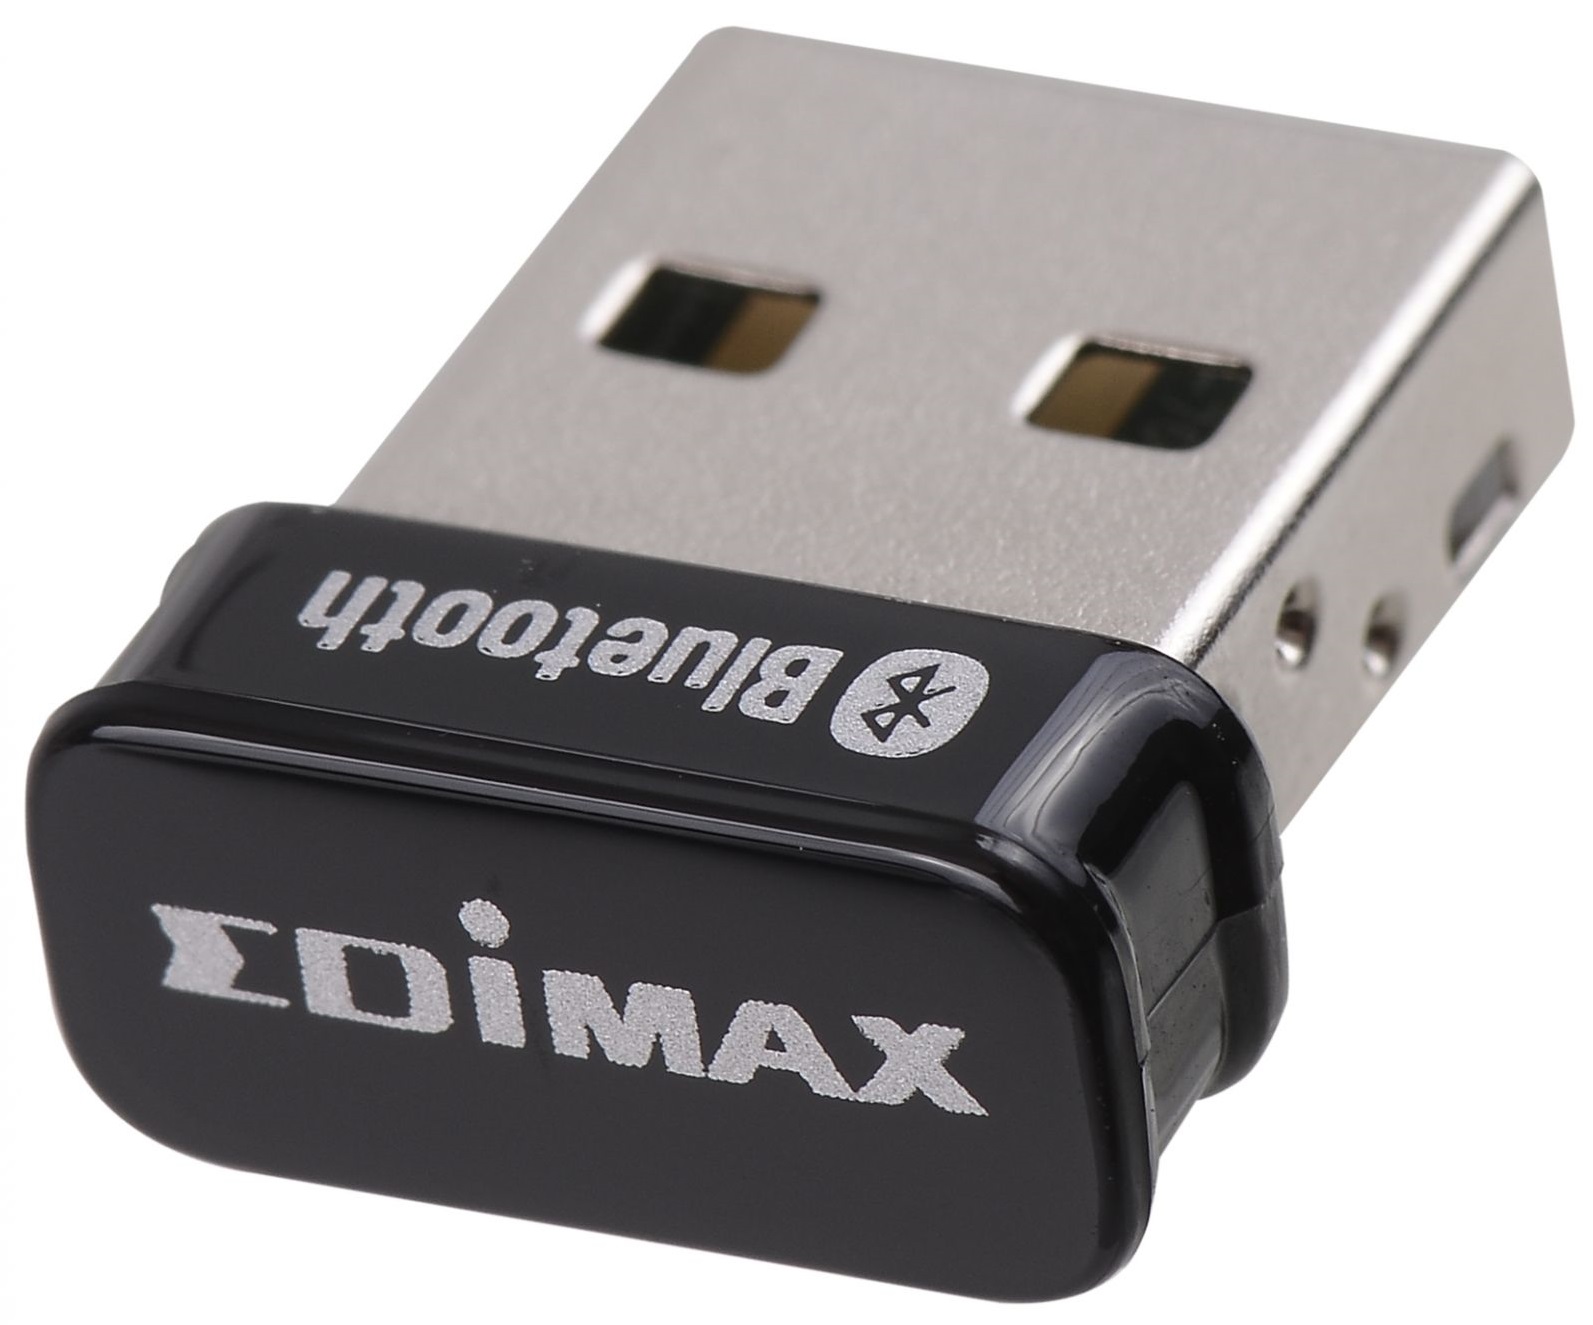 Адаптер Bluetooth EDIMAX BT-8500 5.0, nano в Киеве